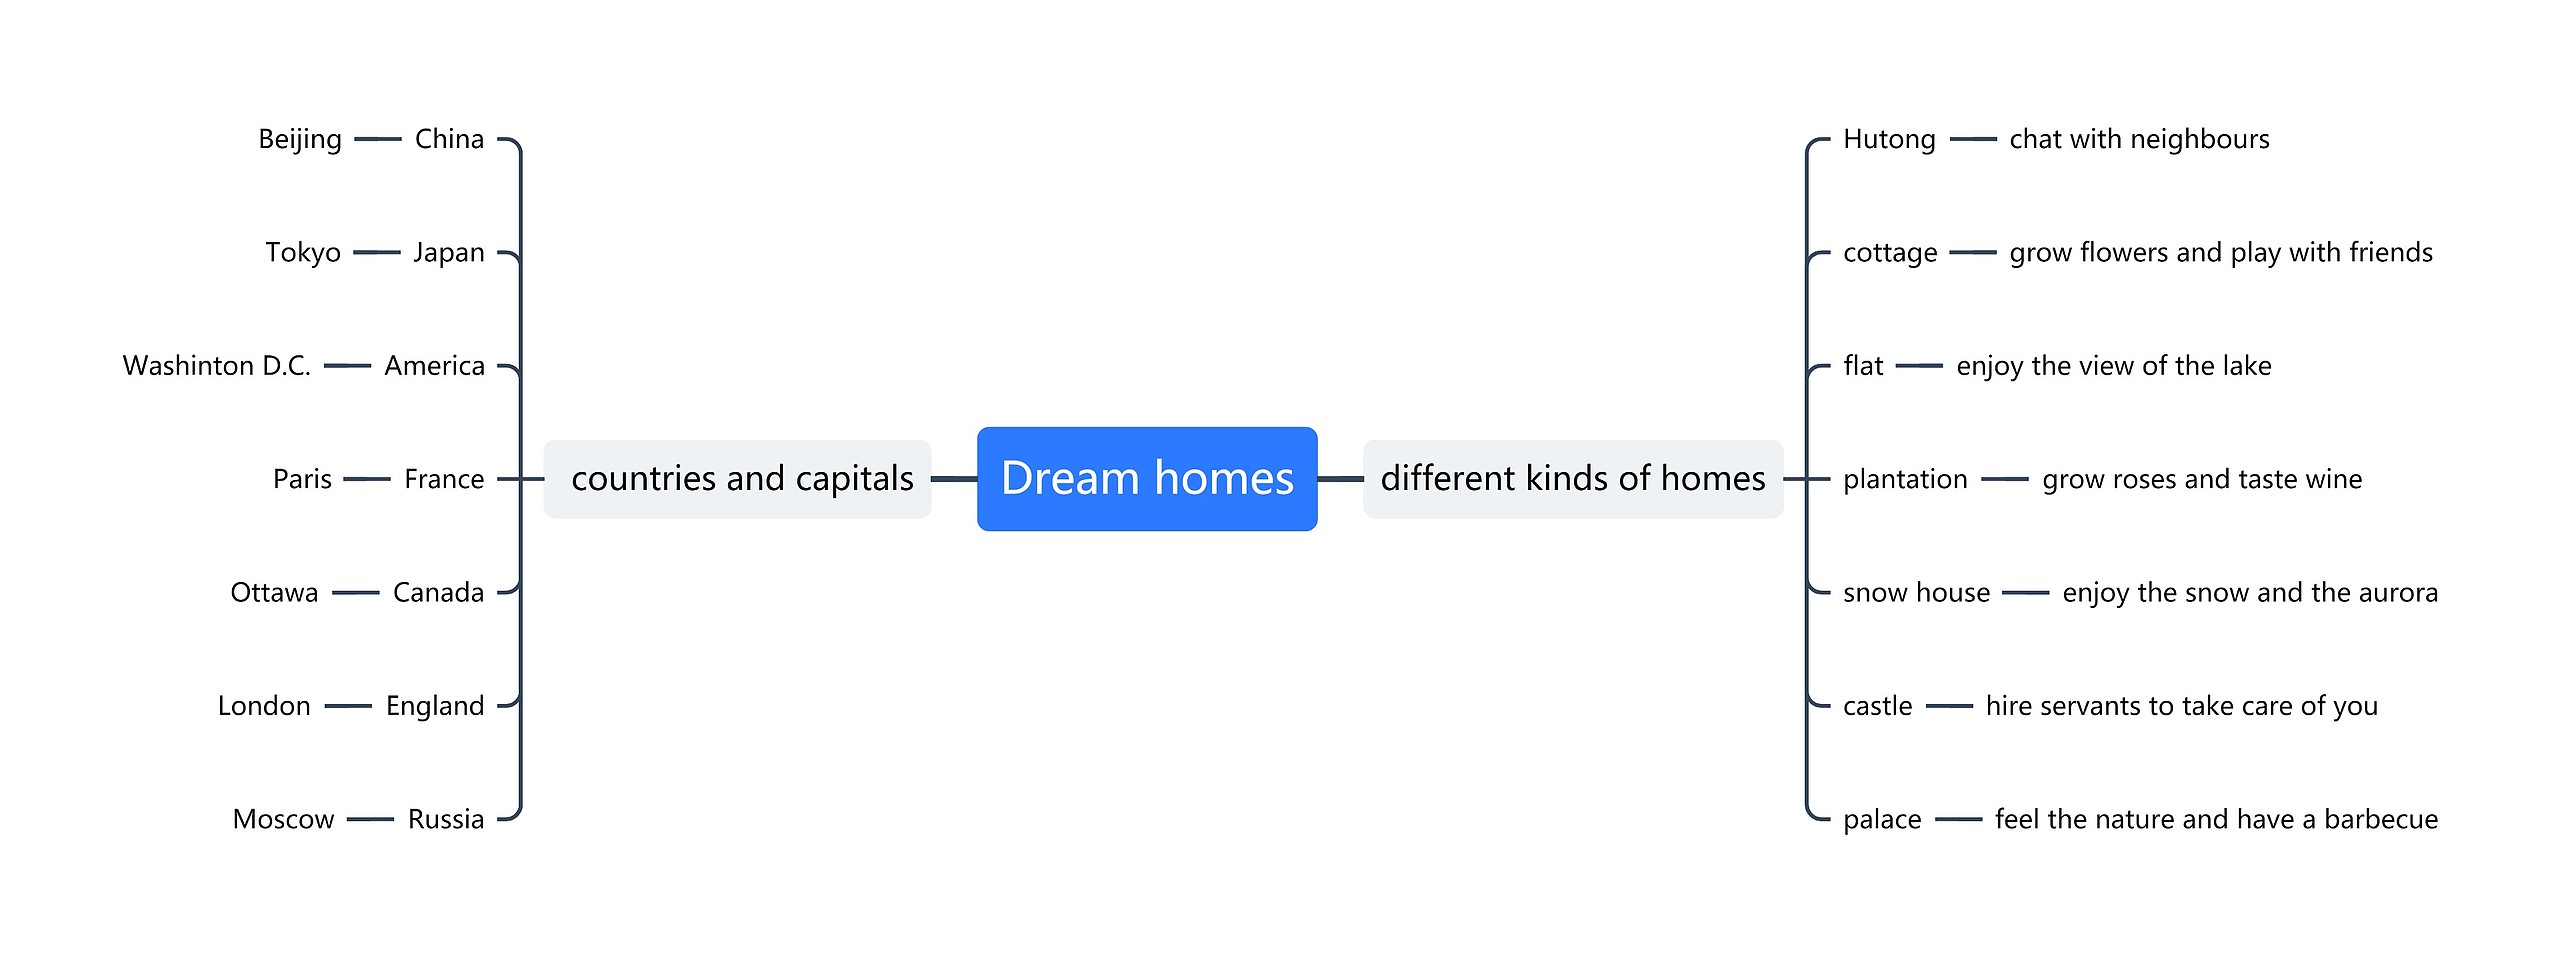 Dream homes